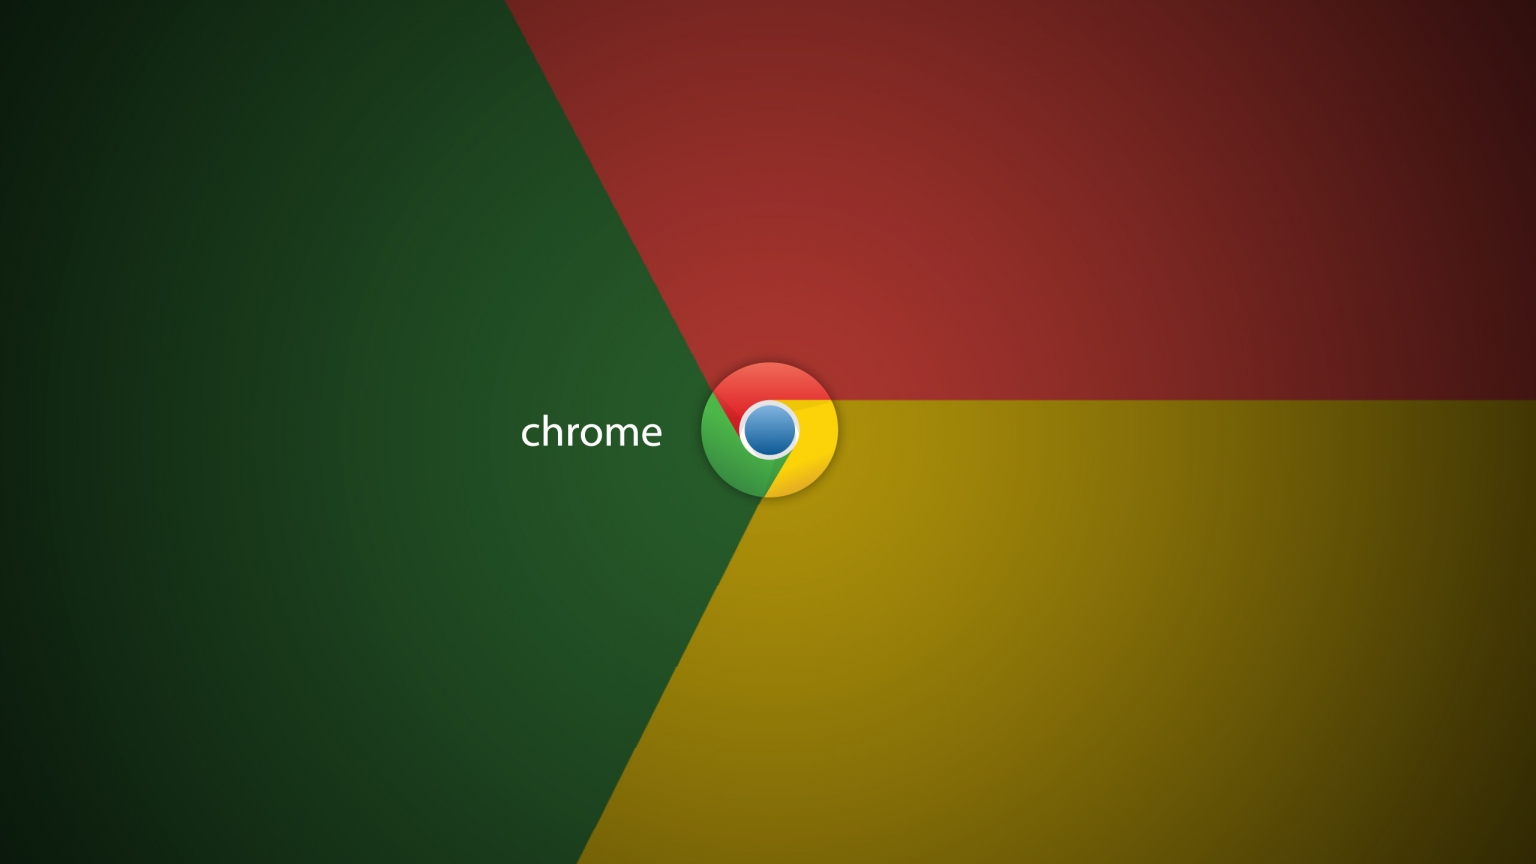 Just Google Chrome for 1536 x 864 HDTV resolution